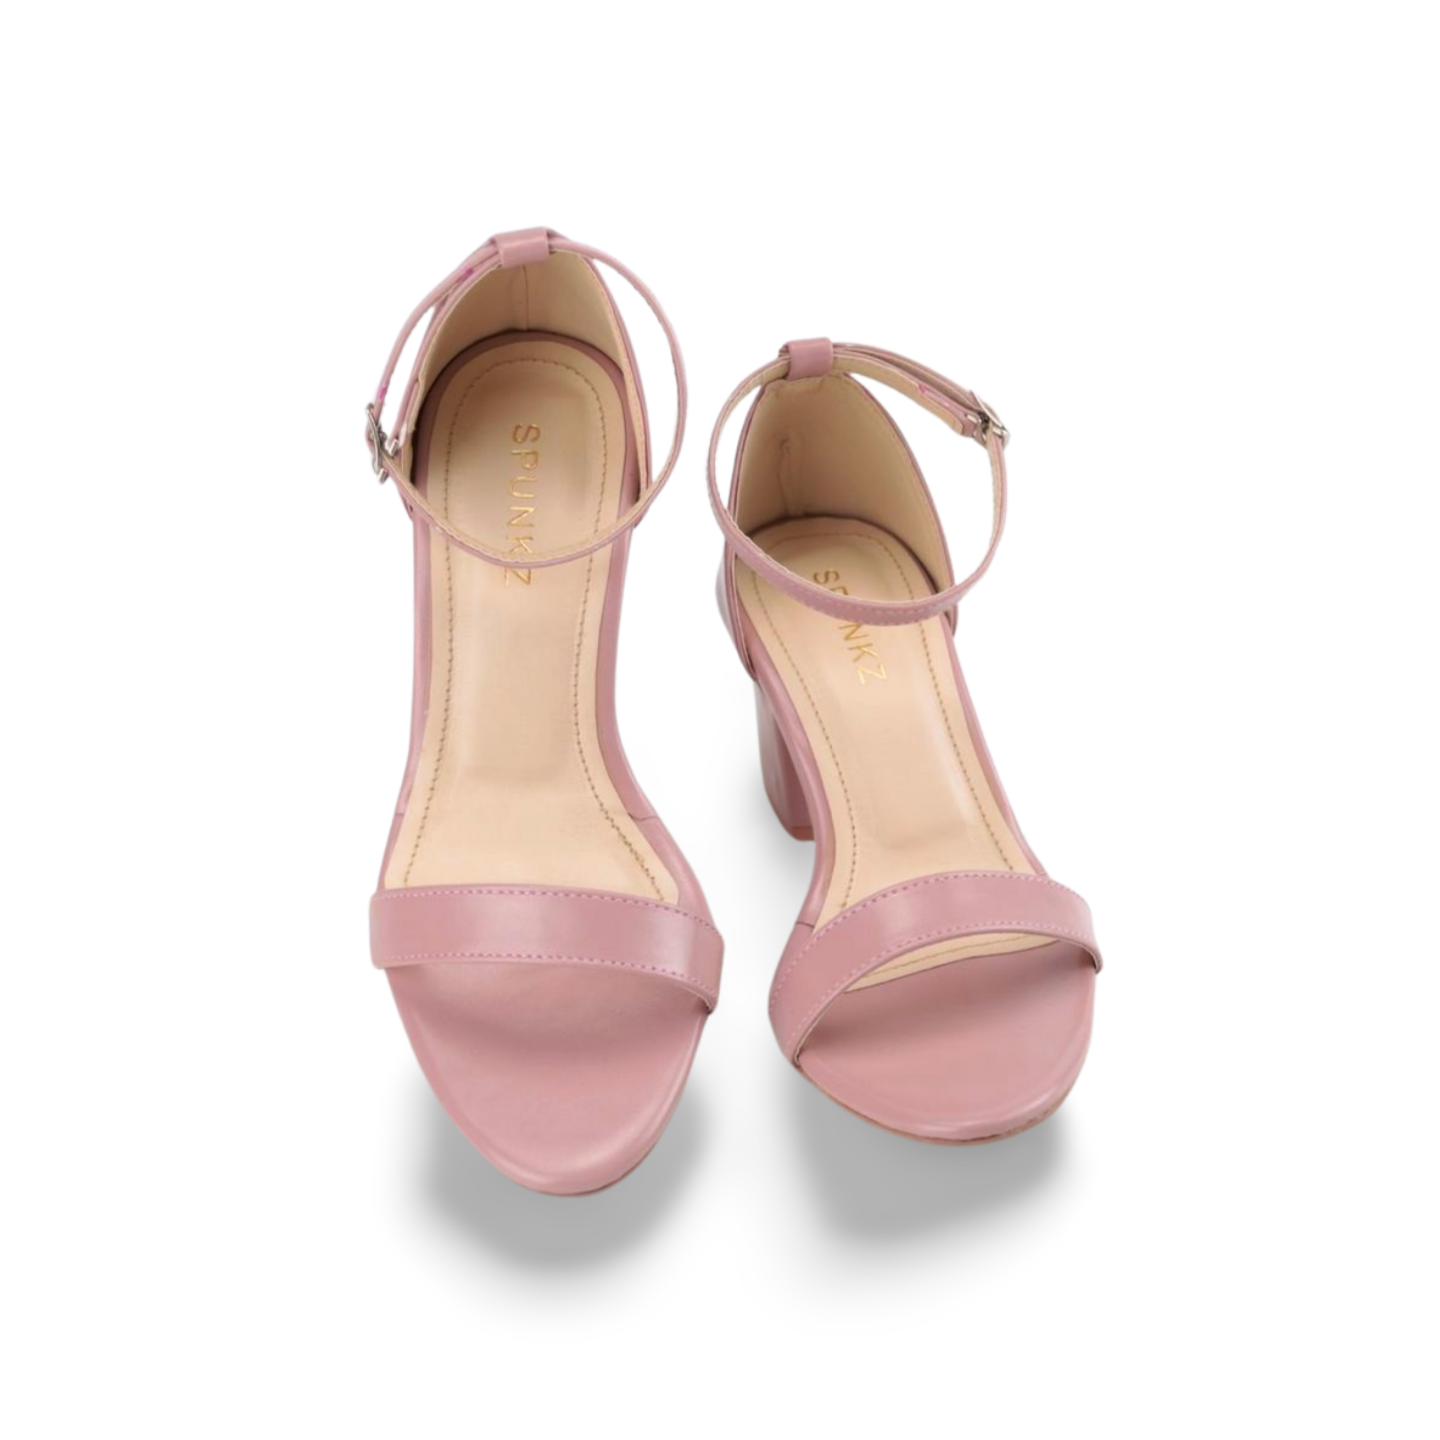 Elegant Women's High Heel Block Sandals with Adjustable Ankle Strap